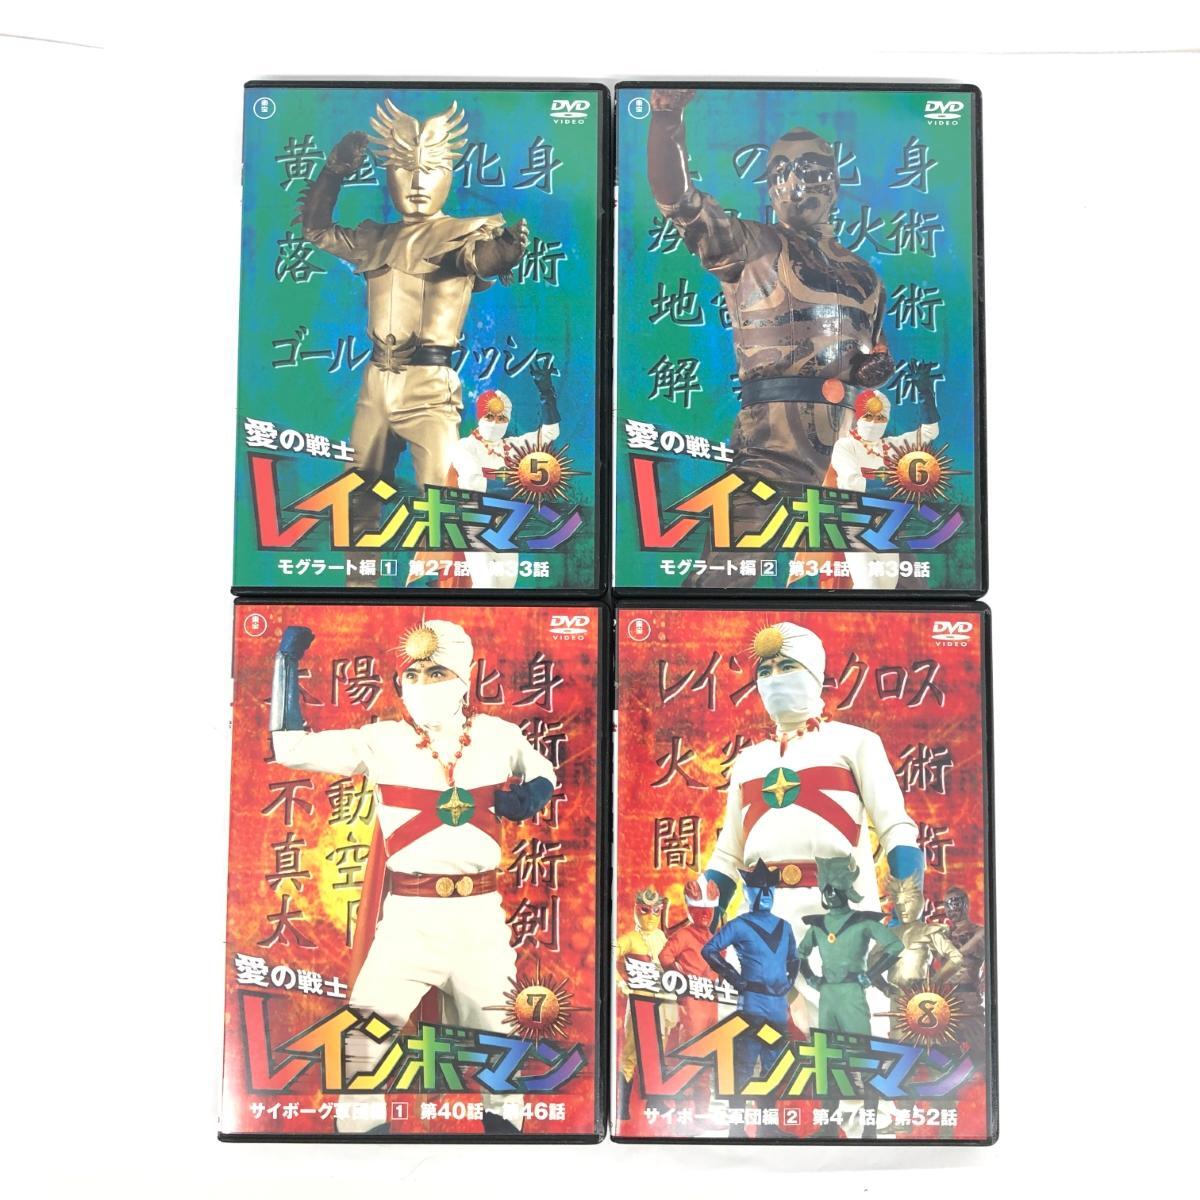  beautiful goods * higashi .TOHO love. warrior Rainbow man DVD * all 8 volume set disk 